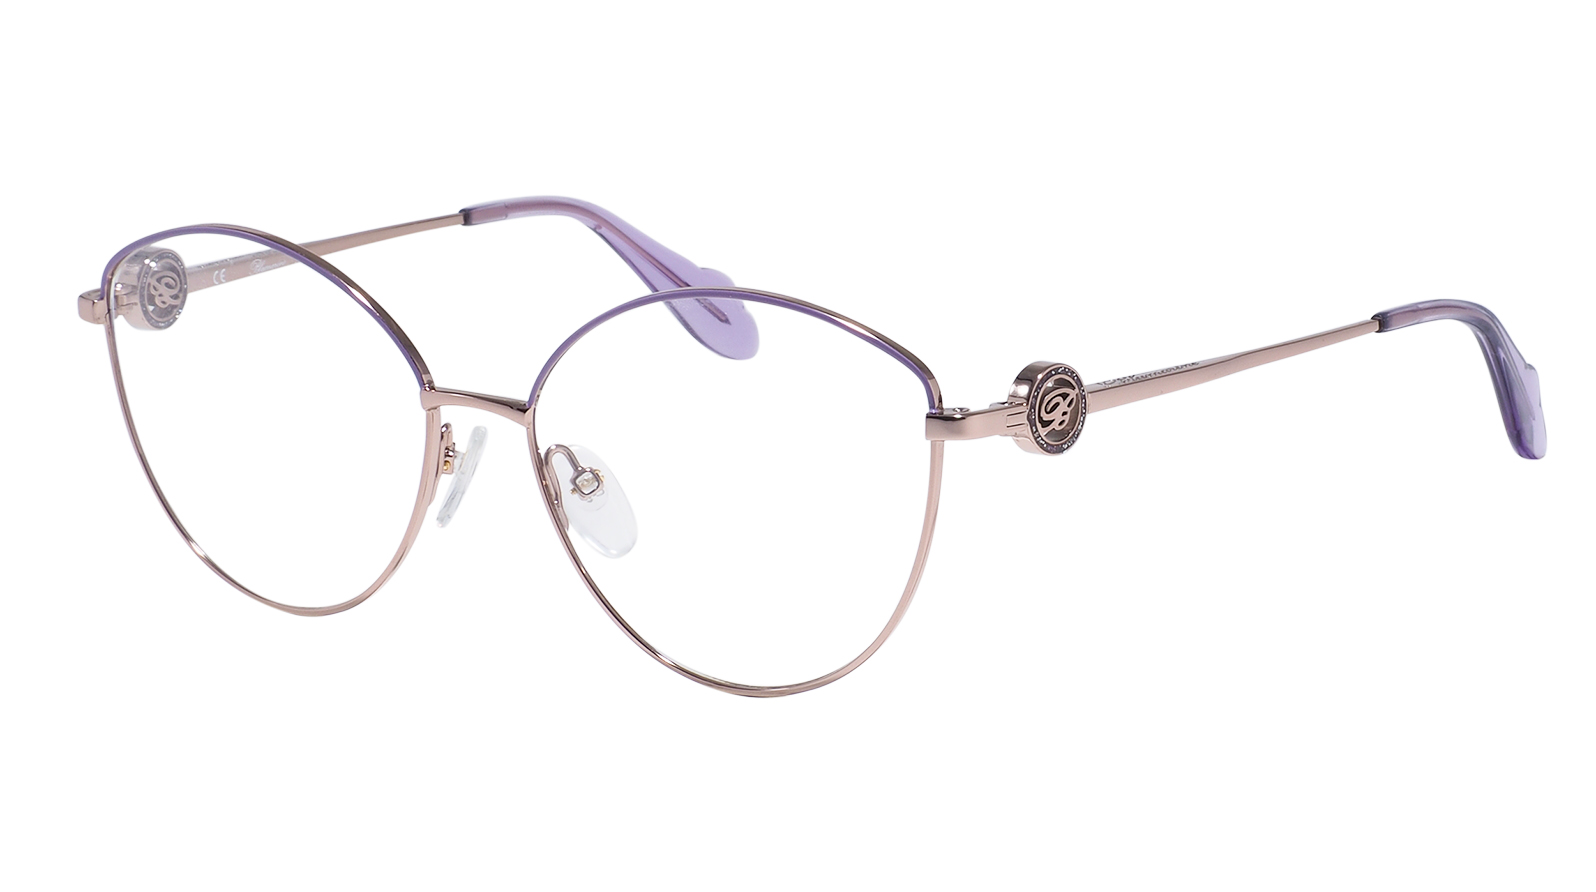 Blumarine 167 E59 очки salivio корригирующие женские с диоптриями 2 0